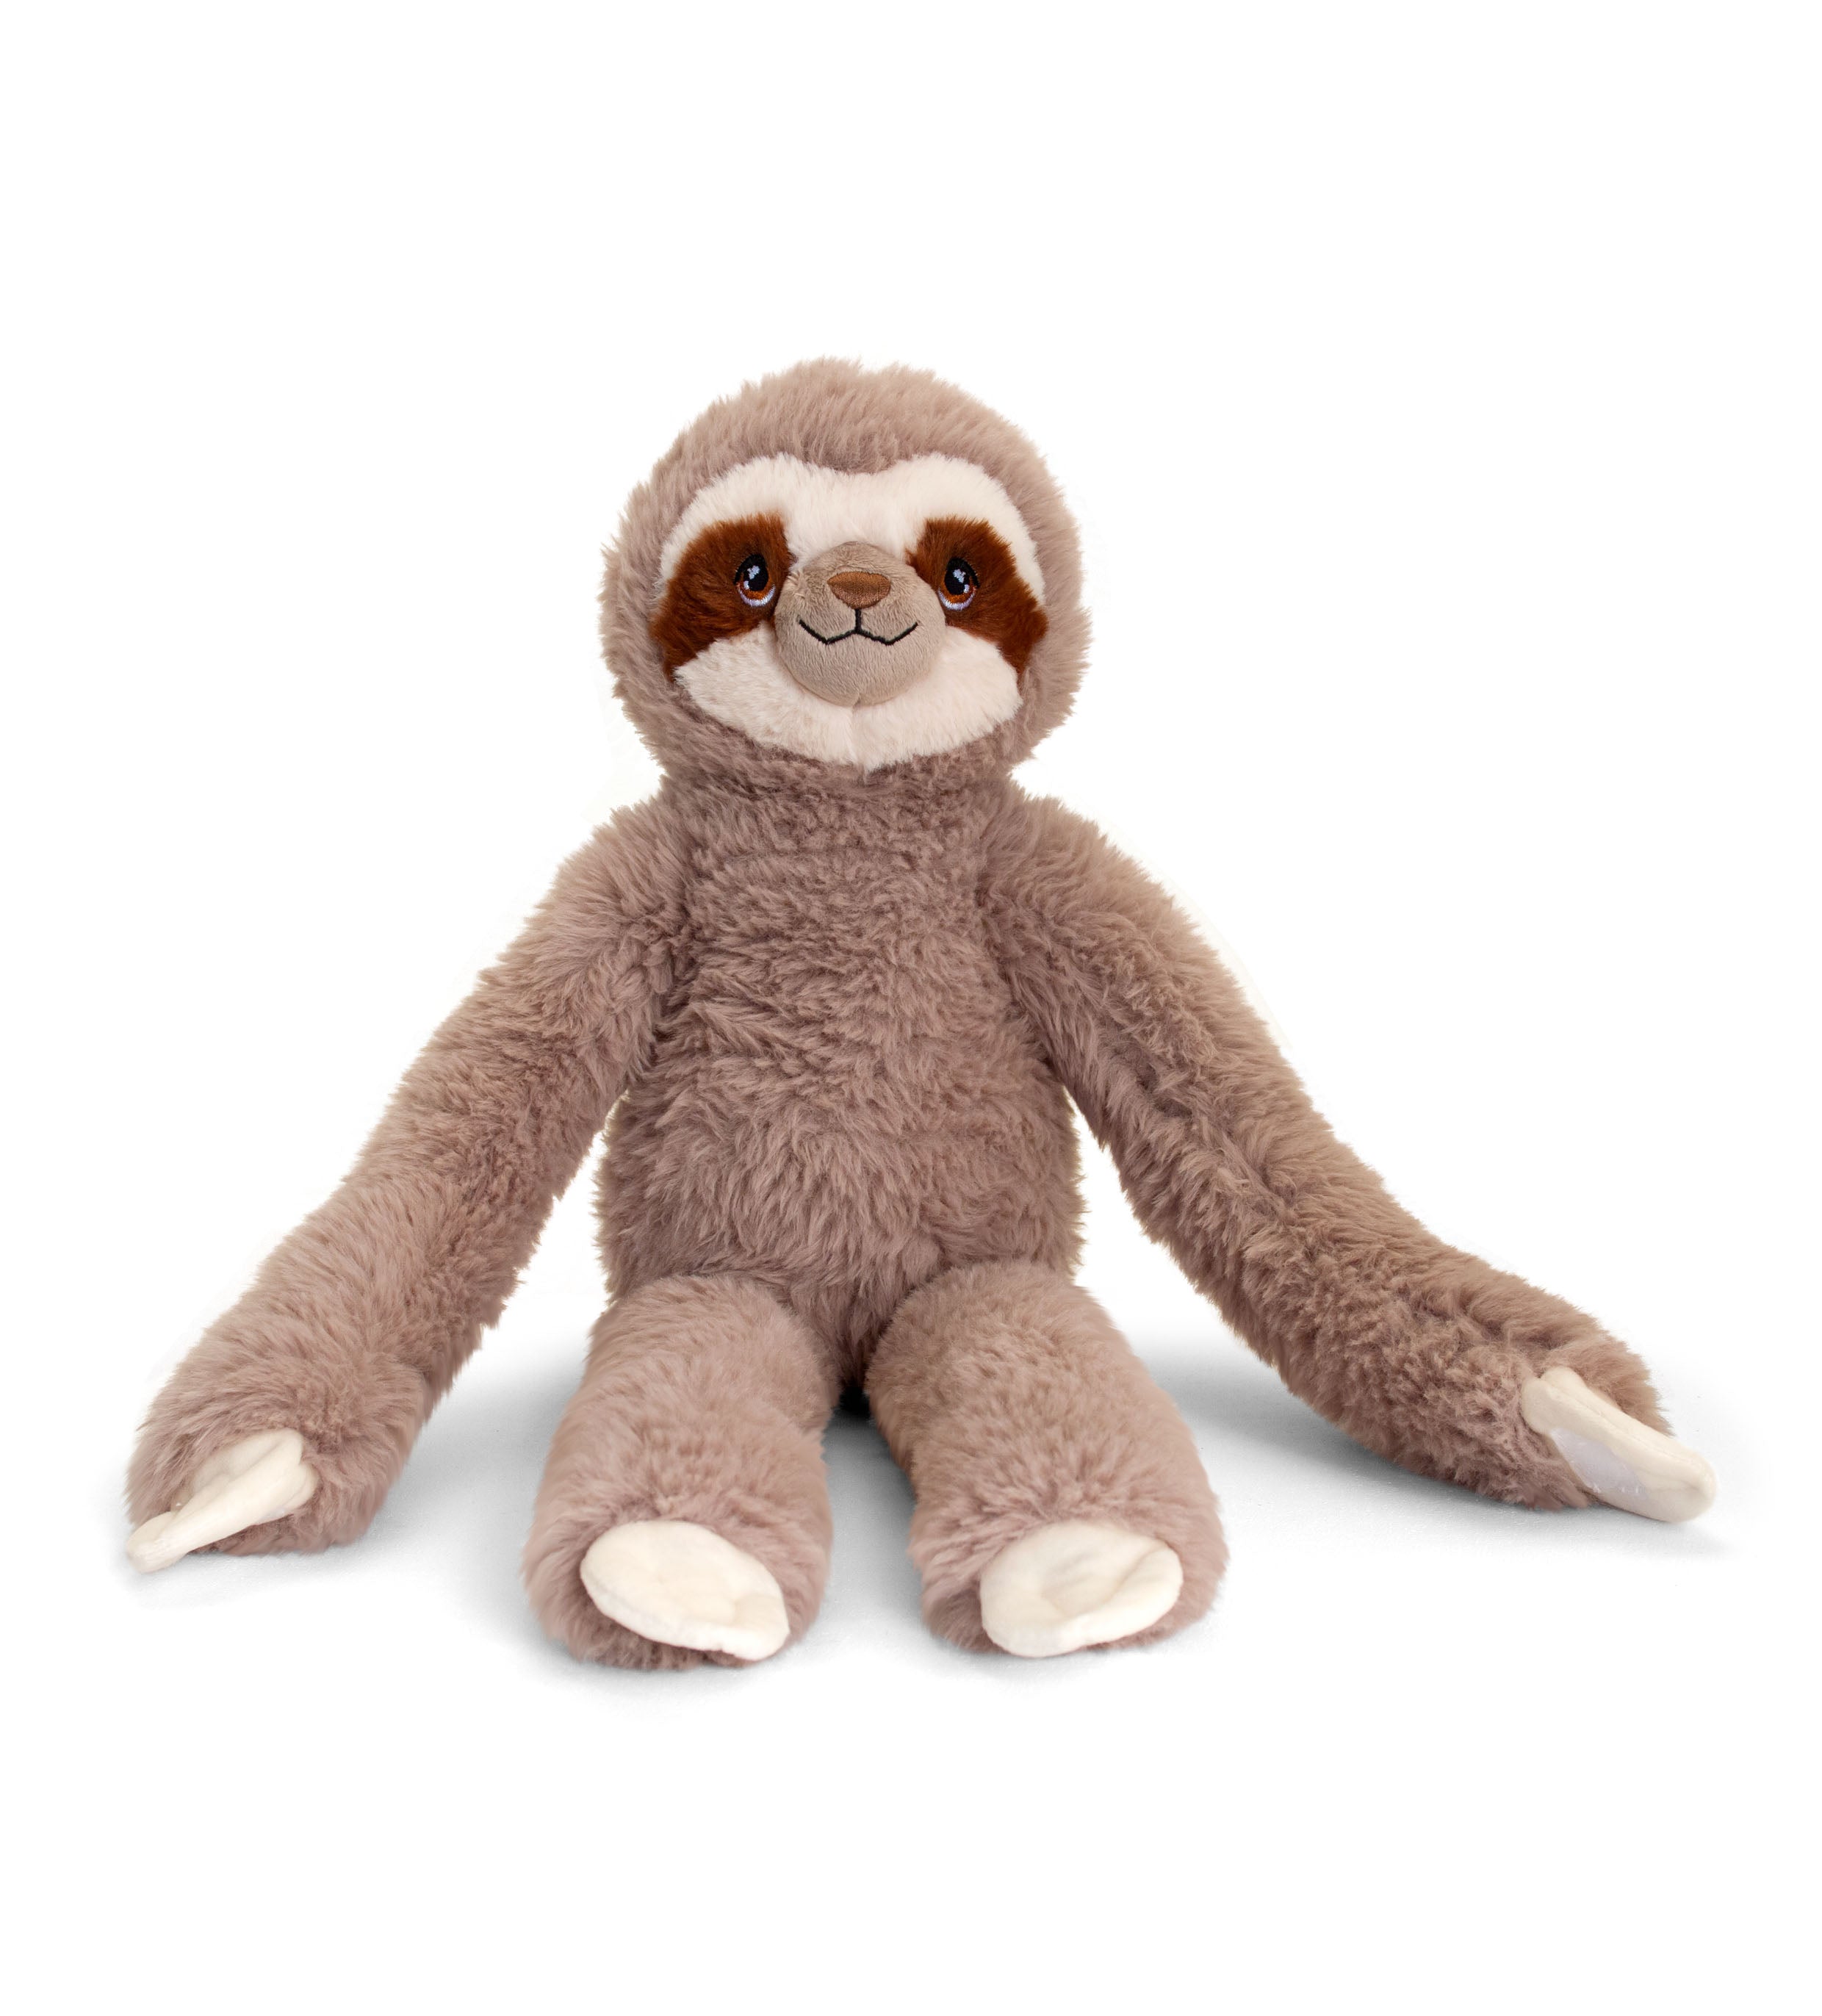 Long Sloth Soft Toy - Keel Toys - 38cm